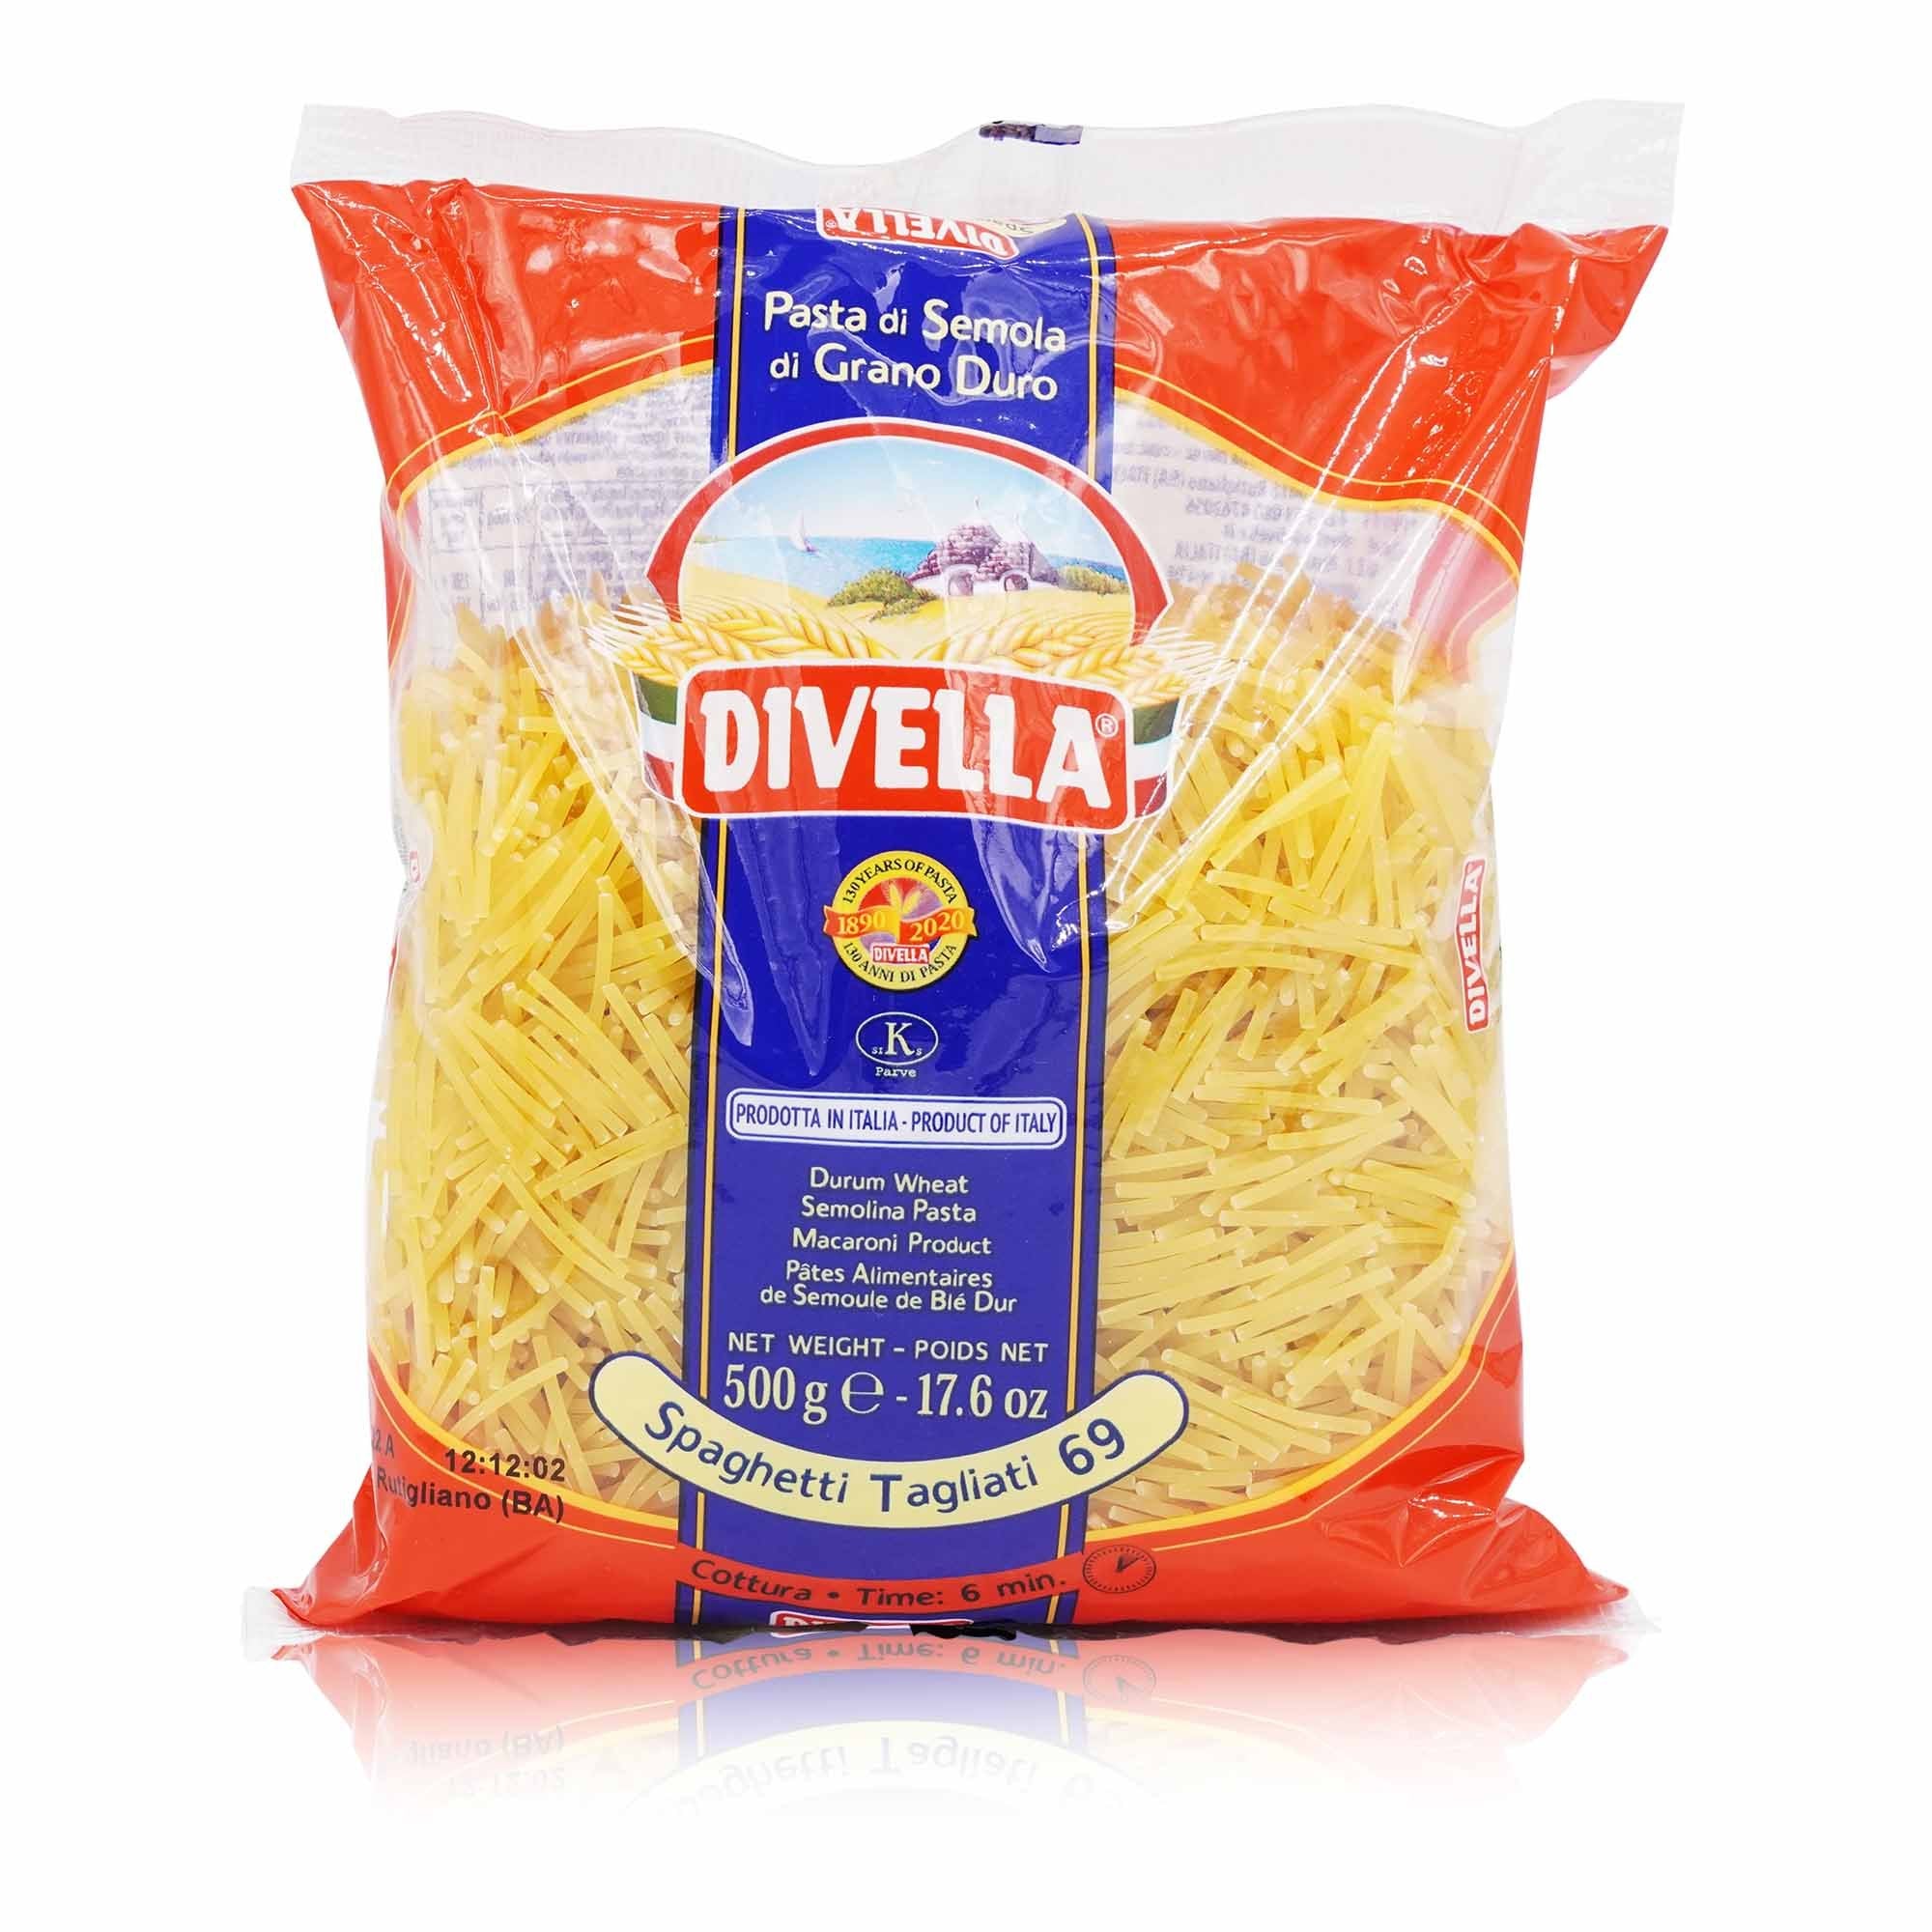 DIVELLA- Spaghetti tagliati Nr. 69 - 0,5kg